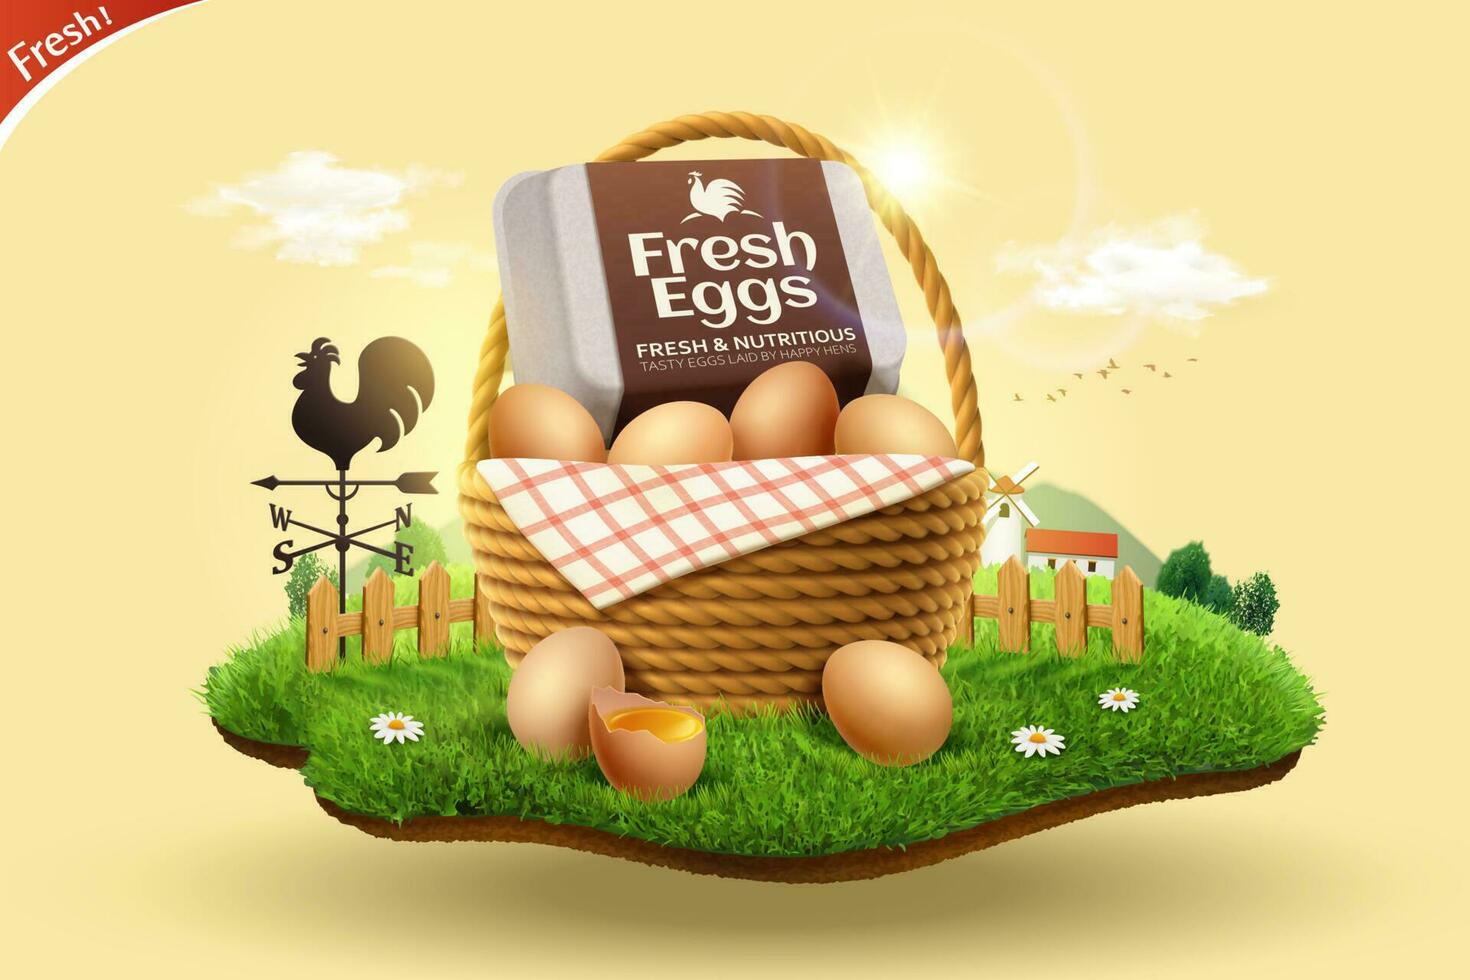 3d fresh eggs advertisement for farm product display. A basket of organic brown eggs set on miniature grassy farm land. vector